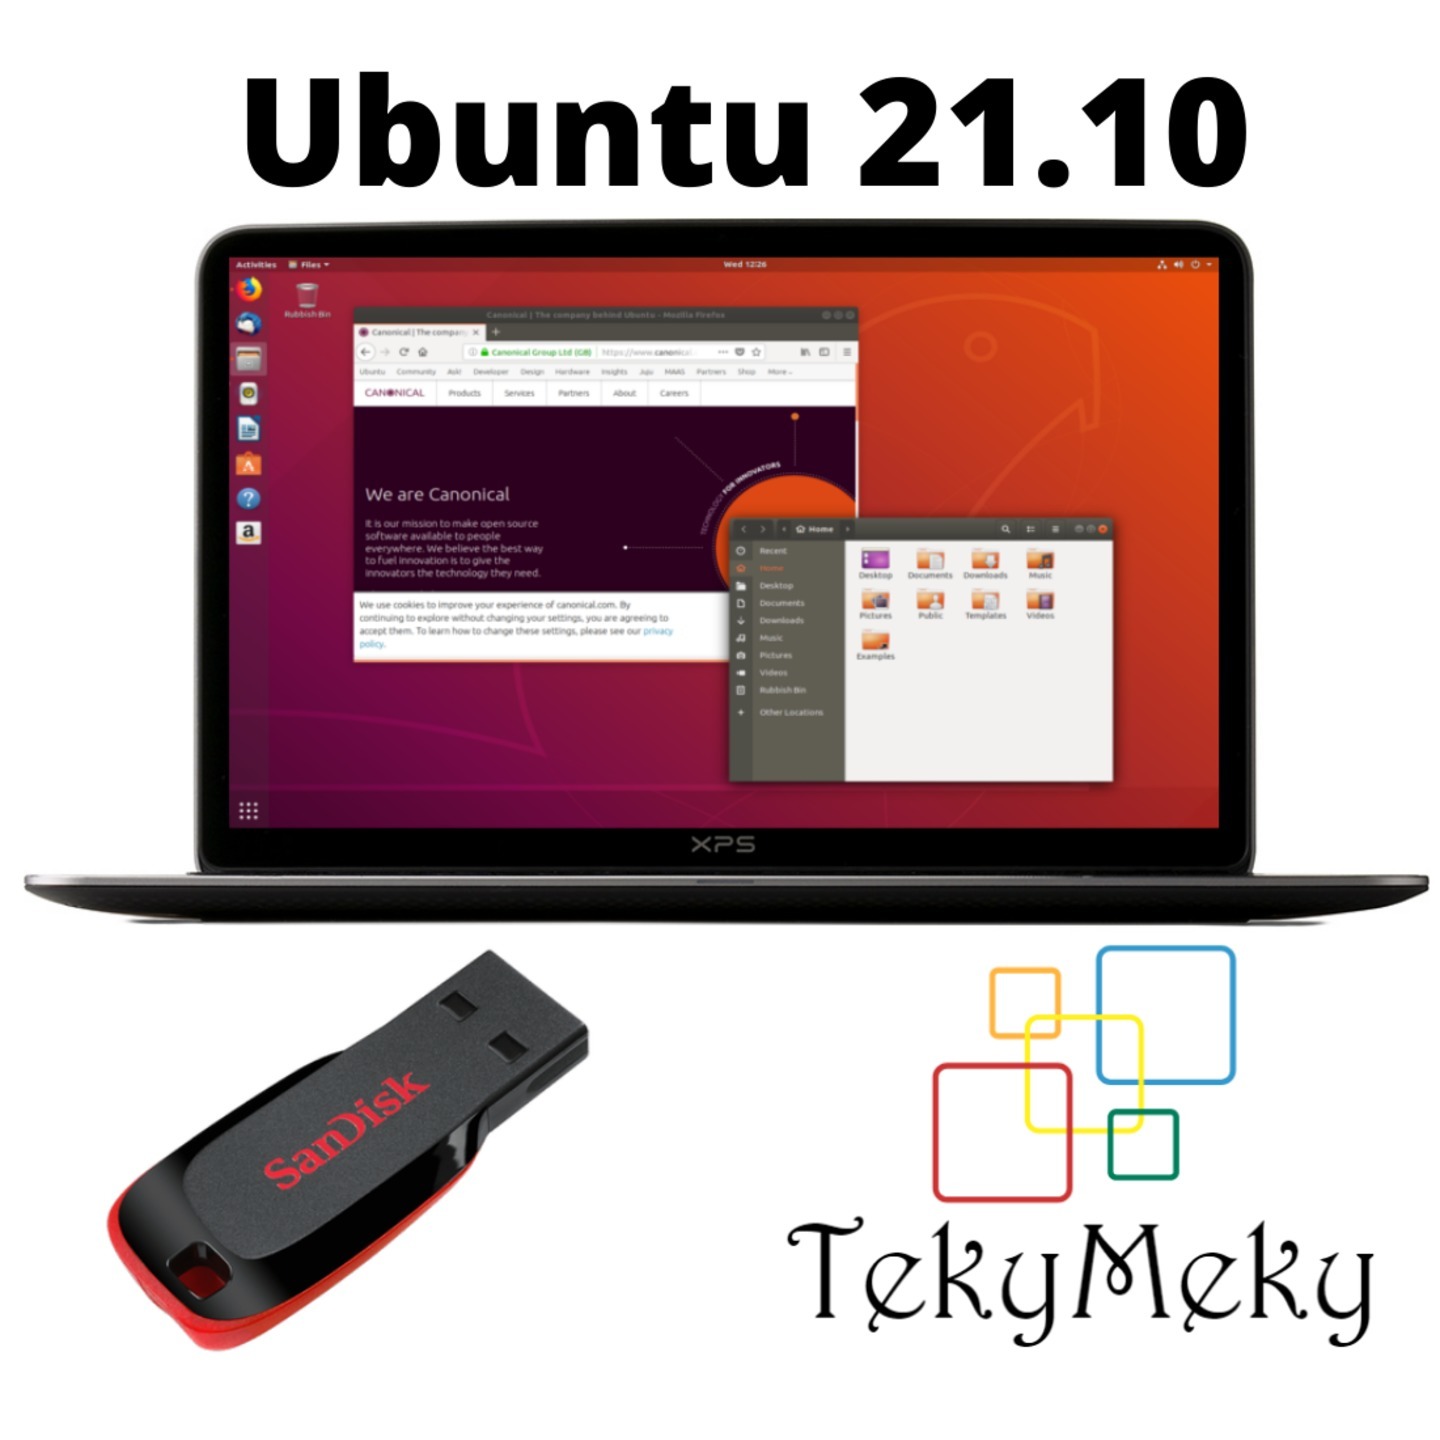 Ubuntu Linux Ver 21.10 Live + Installer 64 Bit Desktop Operating System with 16Gb USB